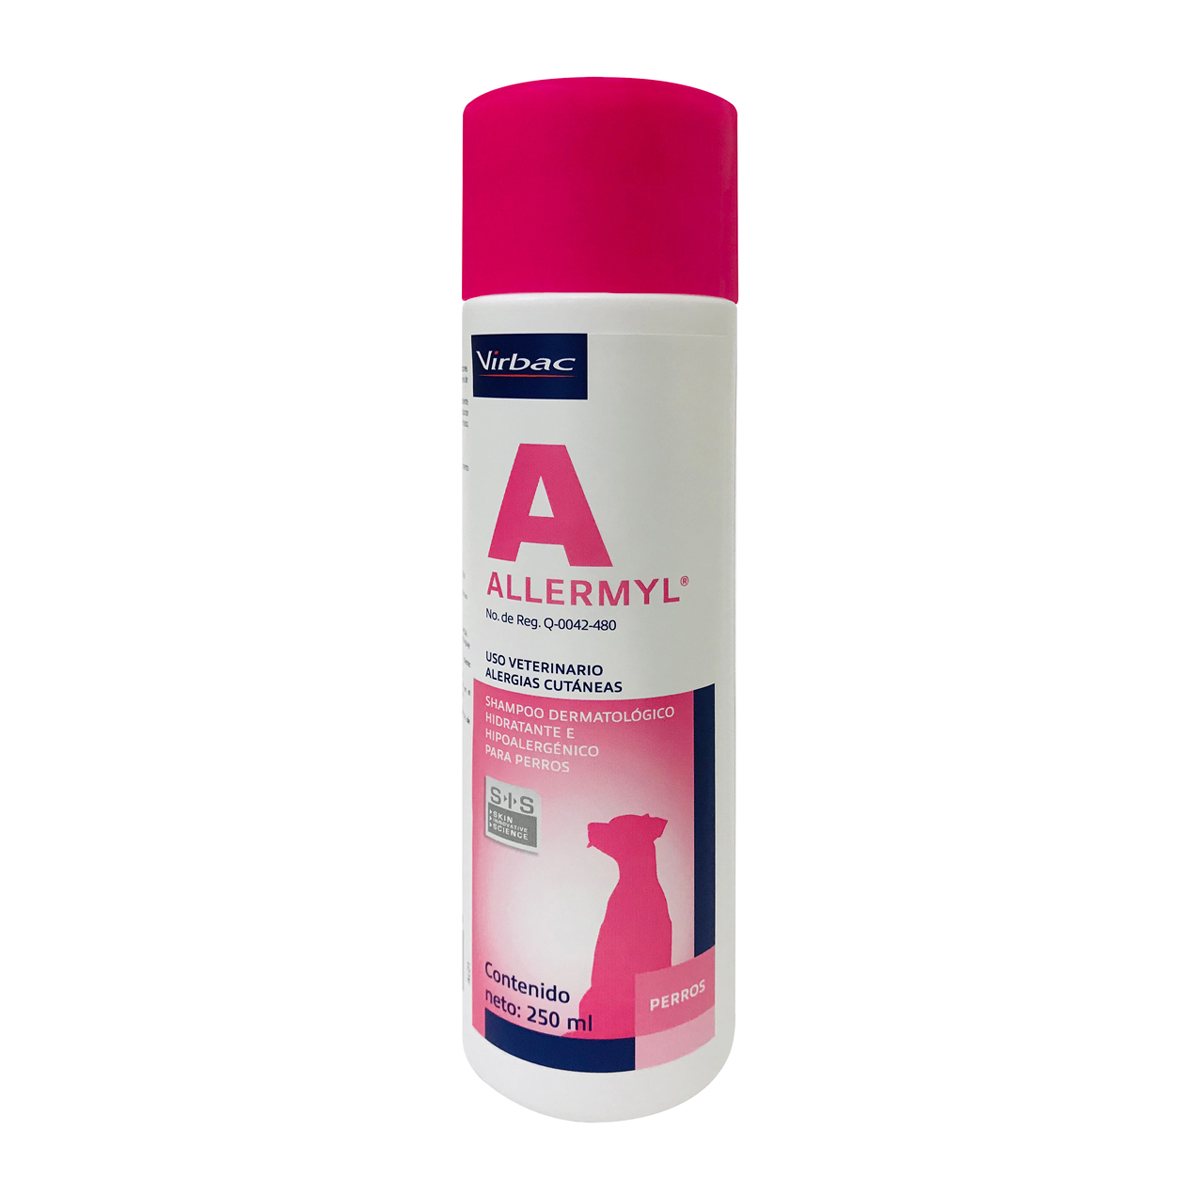 Virbac Allermyl SIS Shampoo Dermatológico, Hipoalergénico e Hidratante para Perro, 250 ml